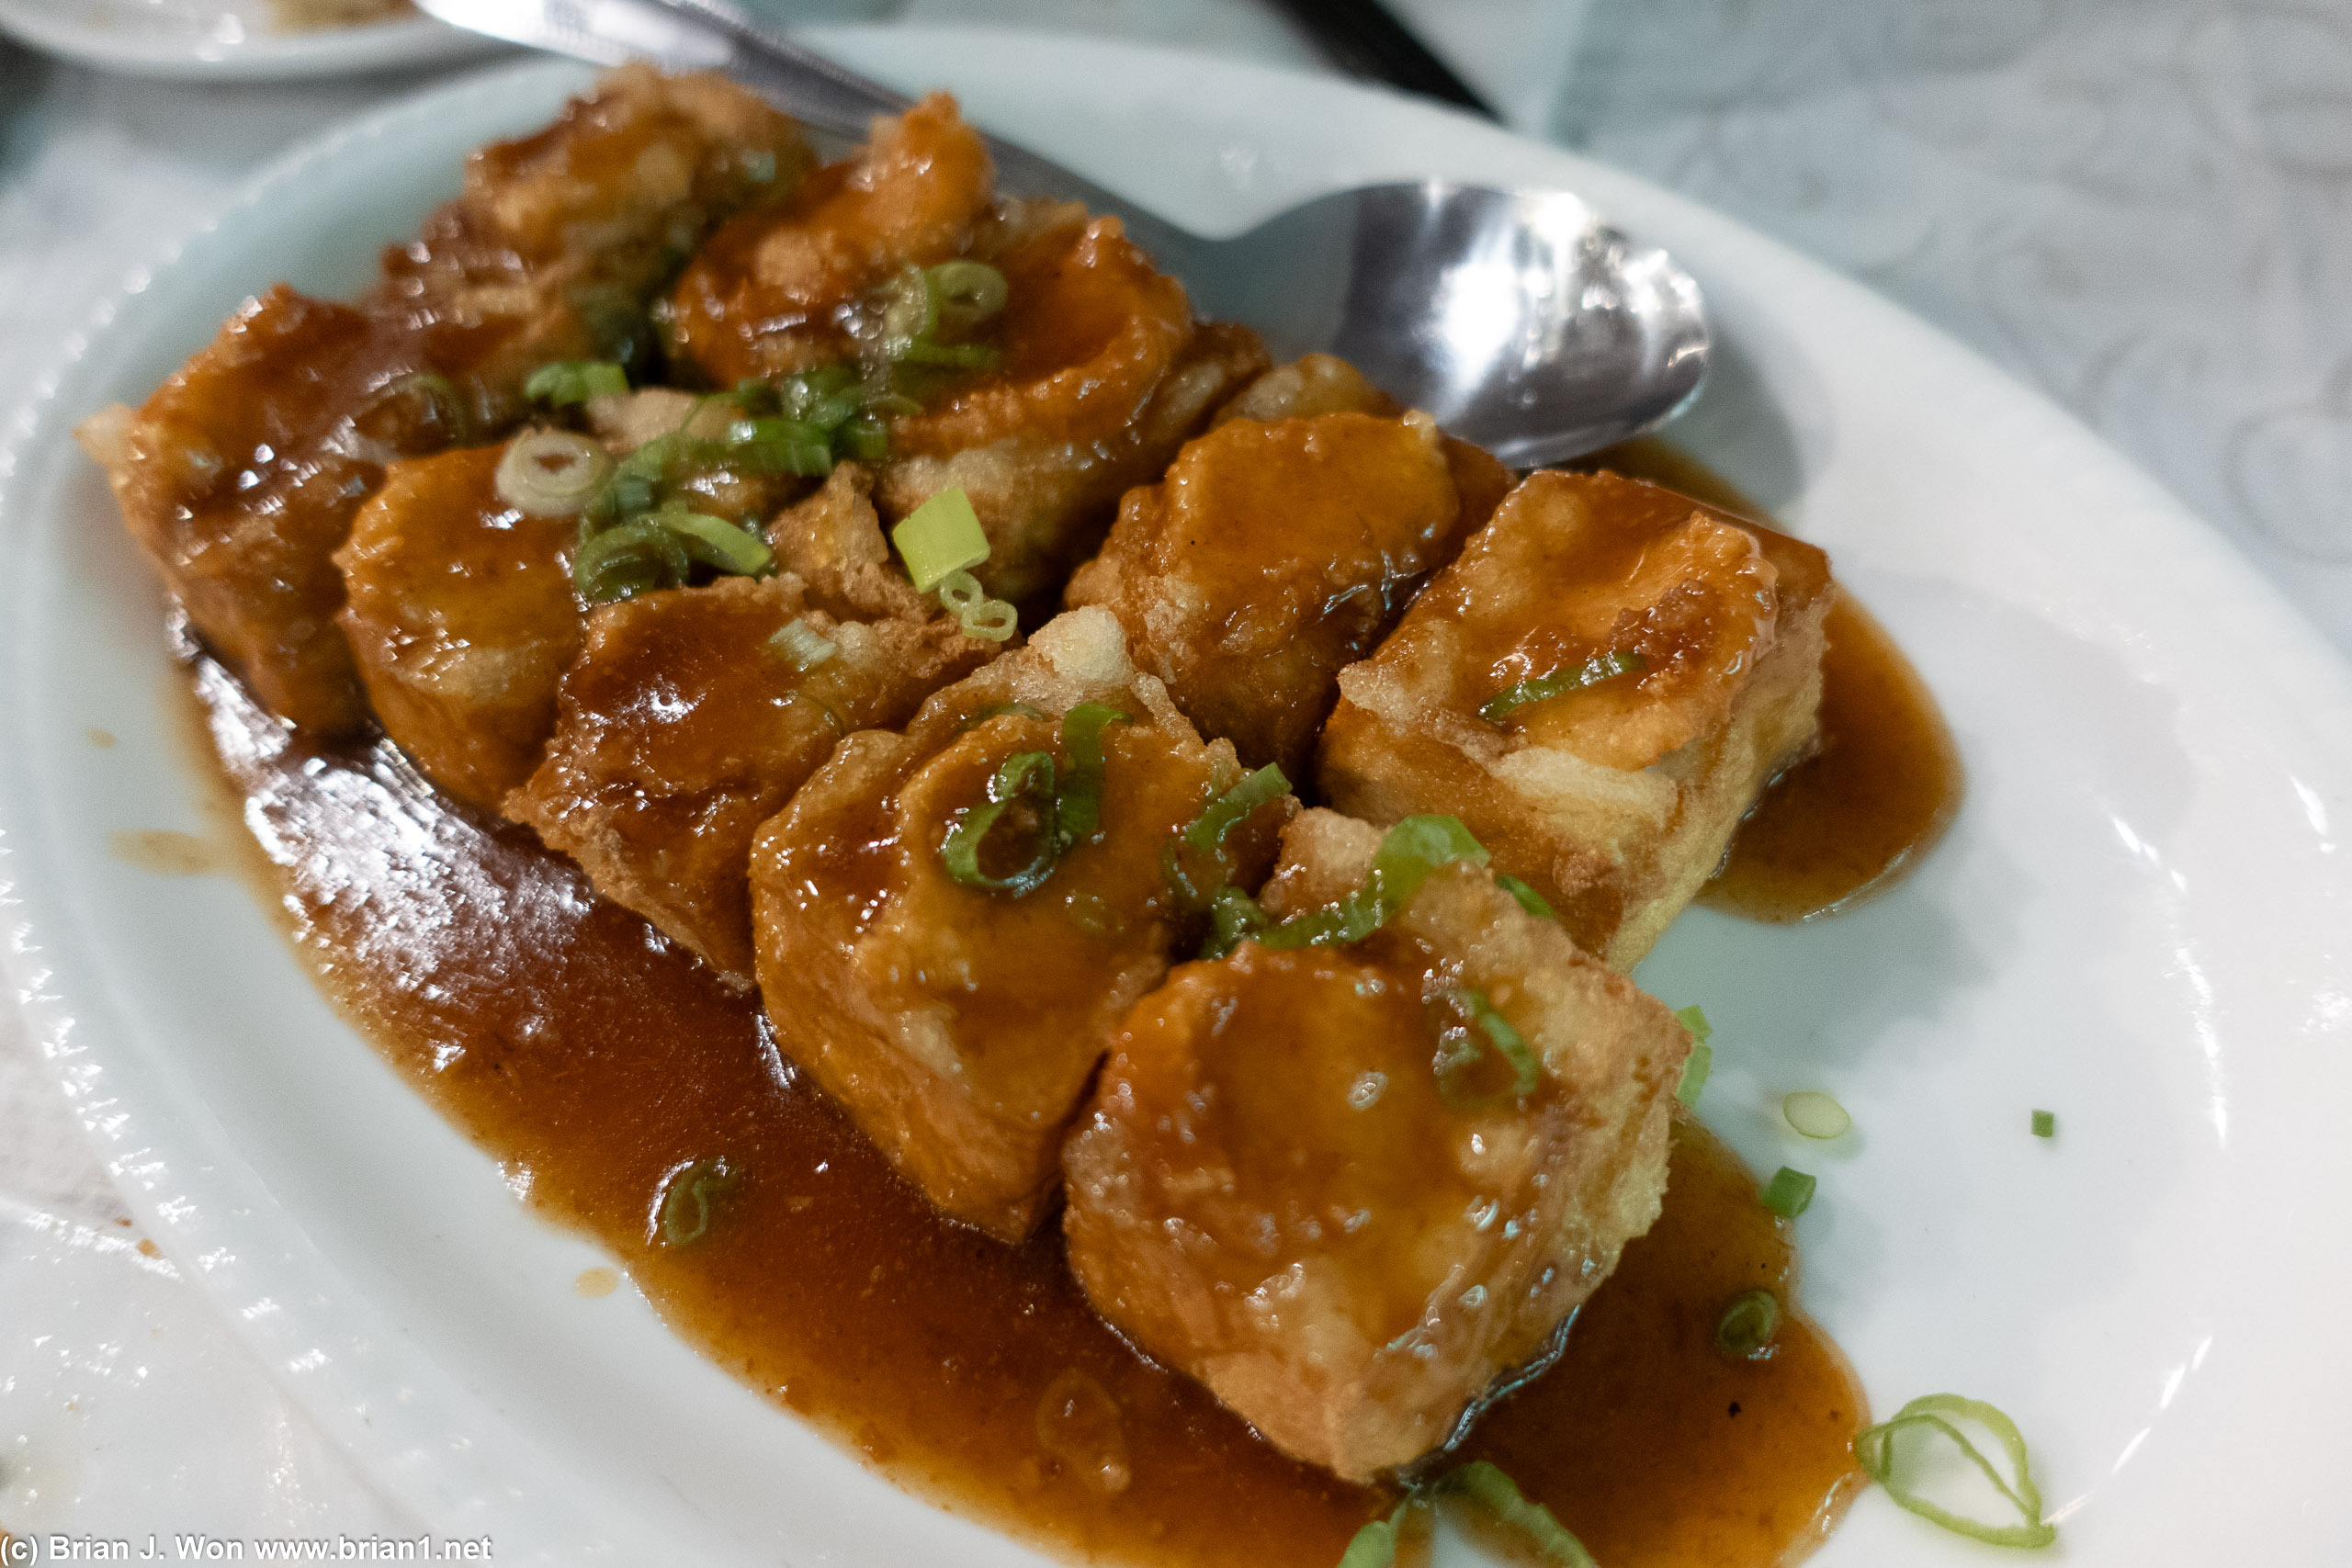 Shrimp-stuffed tofu. Subtle but delicious.